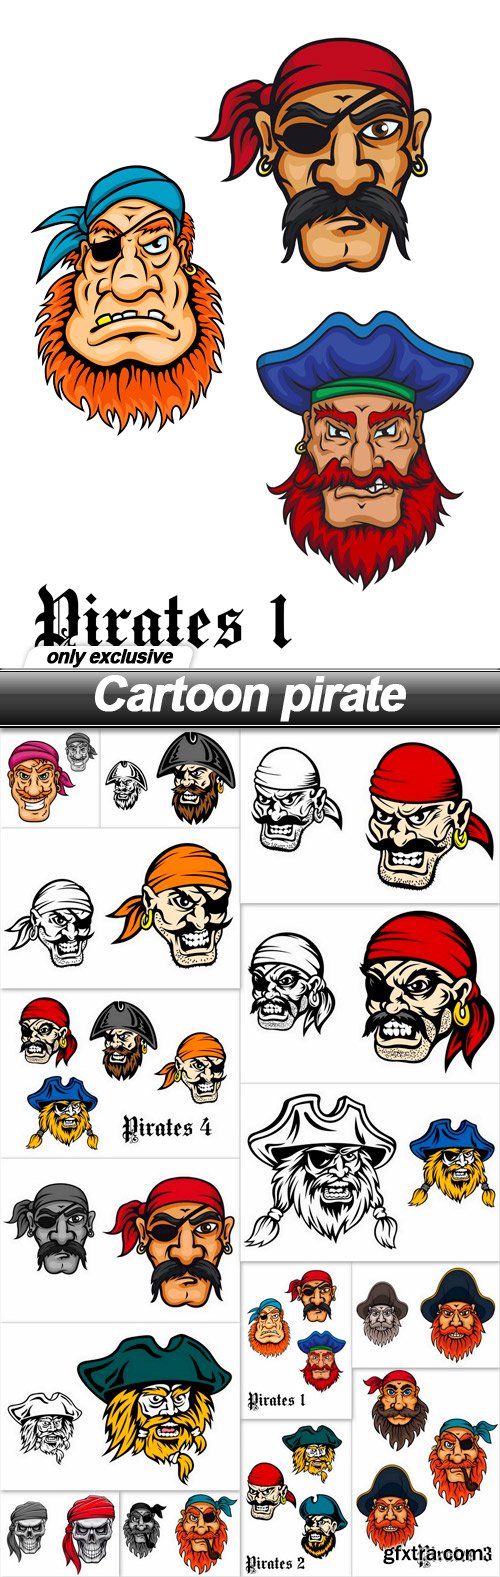 Cartoon pirate - 15 EPS